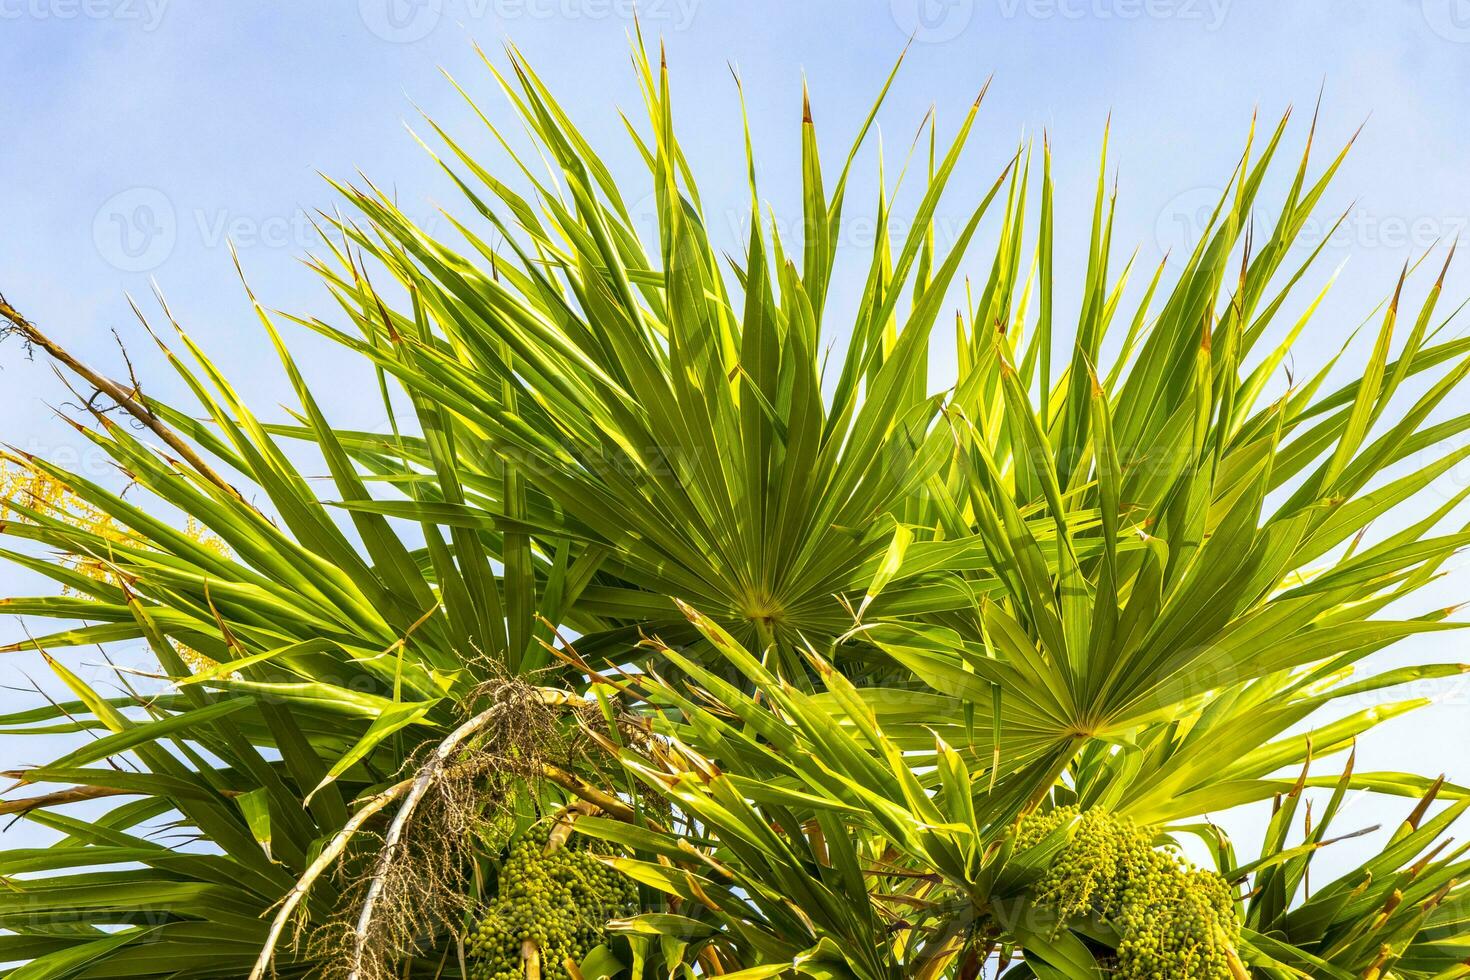 tropicale verde esotico caraibico maya chit palma palme foresta pluviale Messico. foto